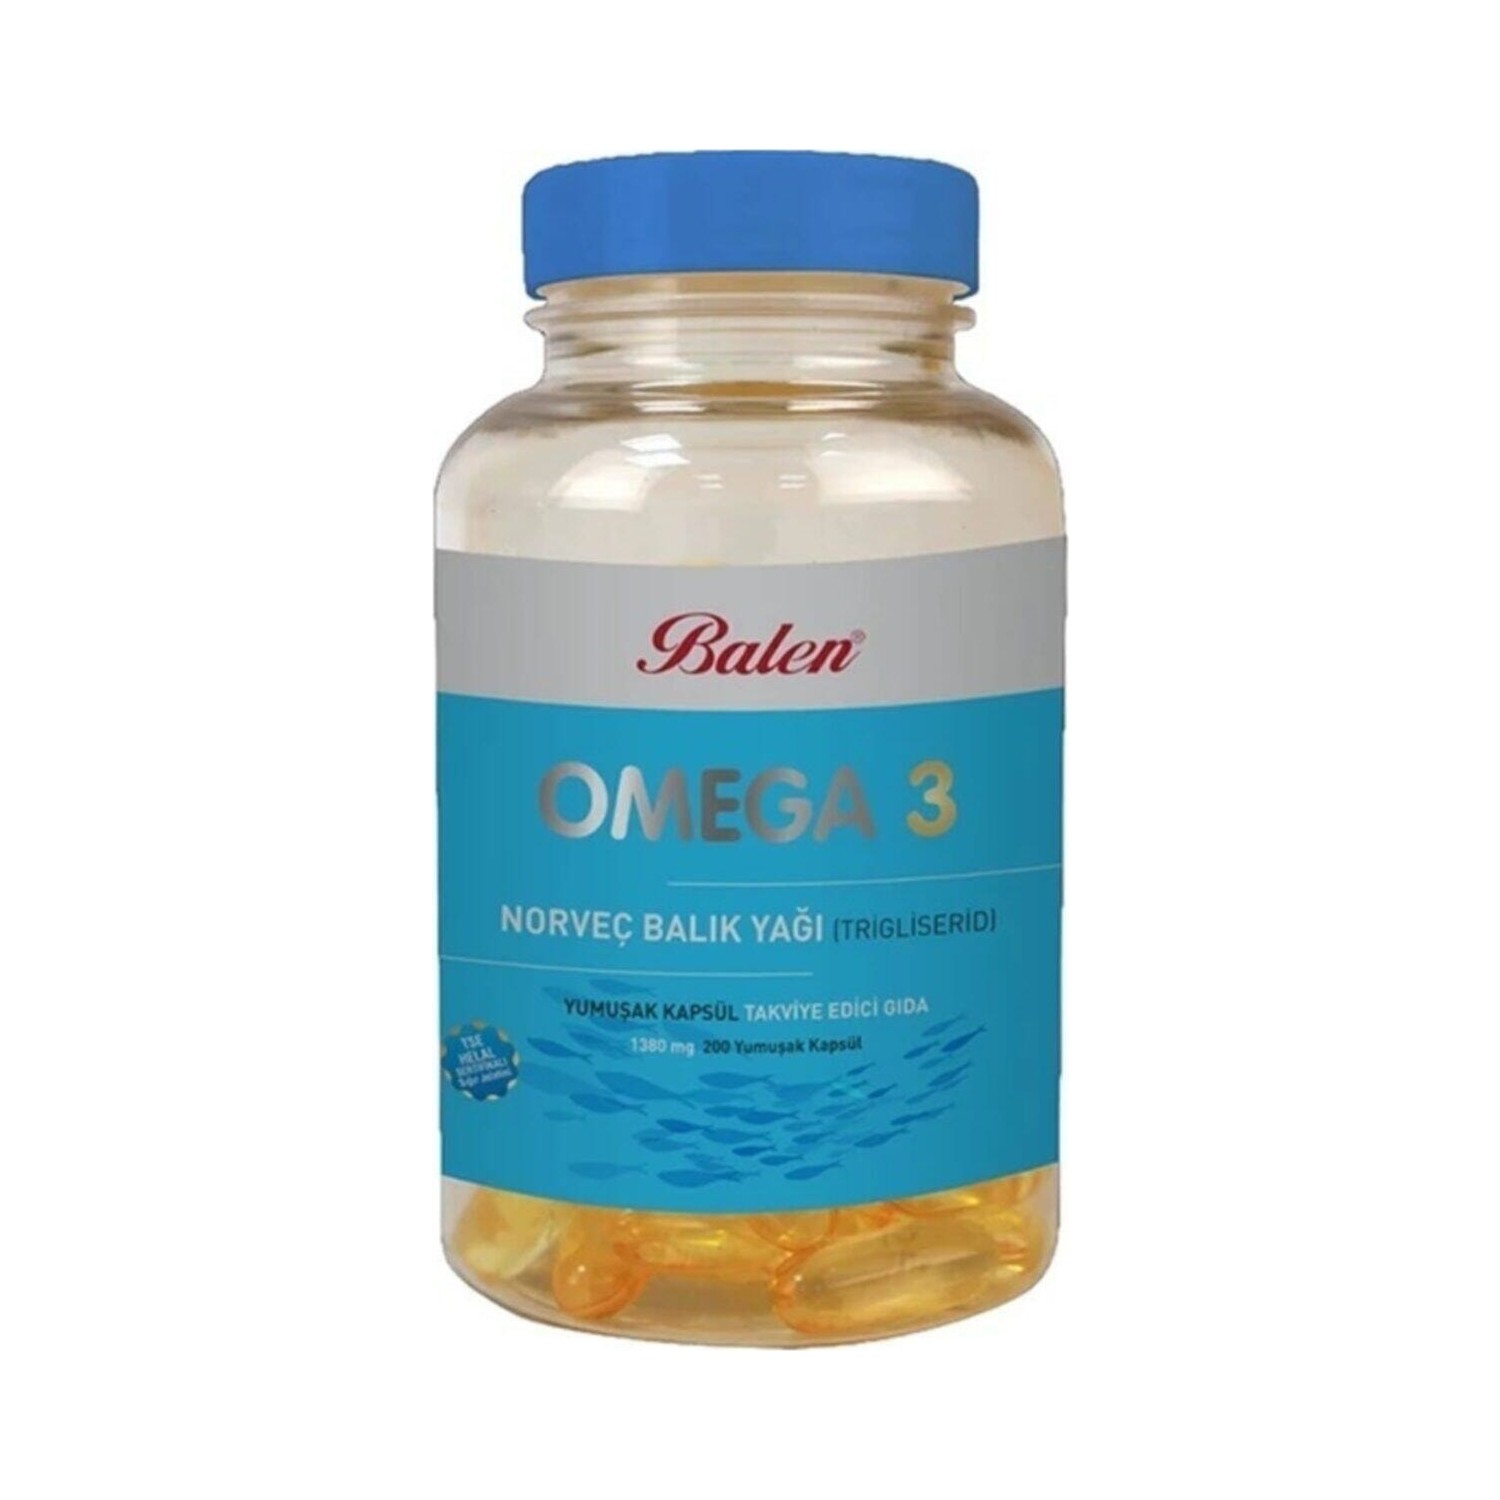 Рыбий жир Balen Omega 3, 200 капсул, 1380 мг сметана чабан халяль 15% 200 г